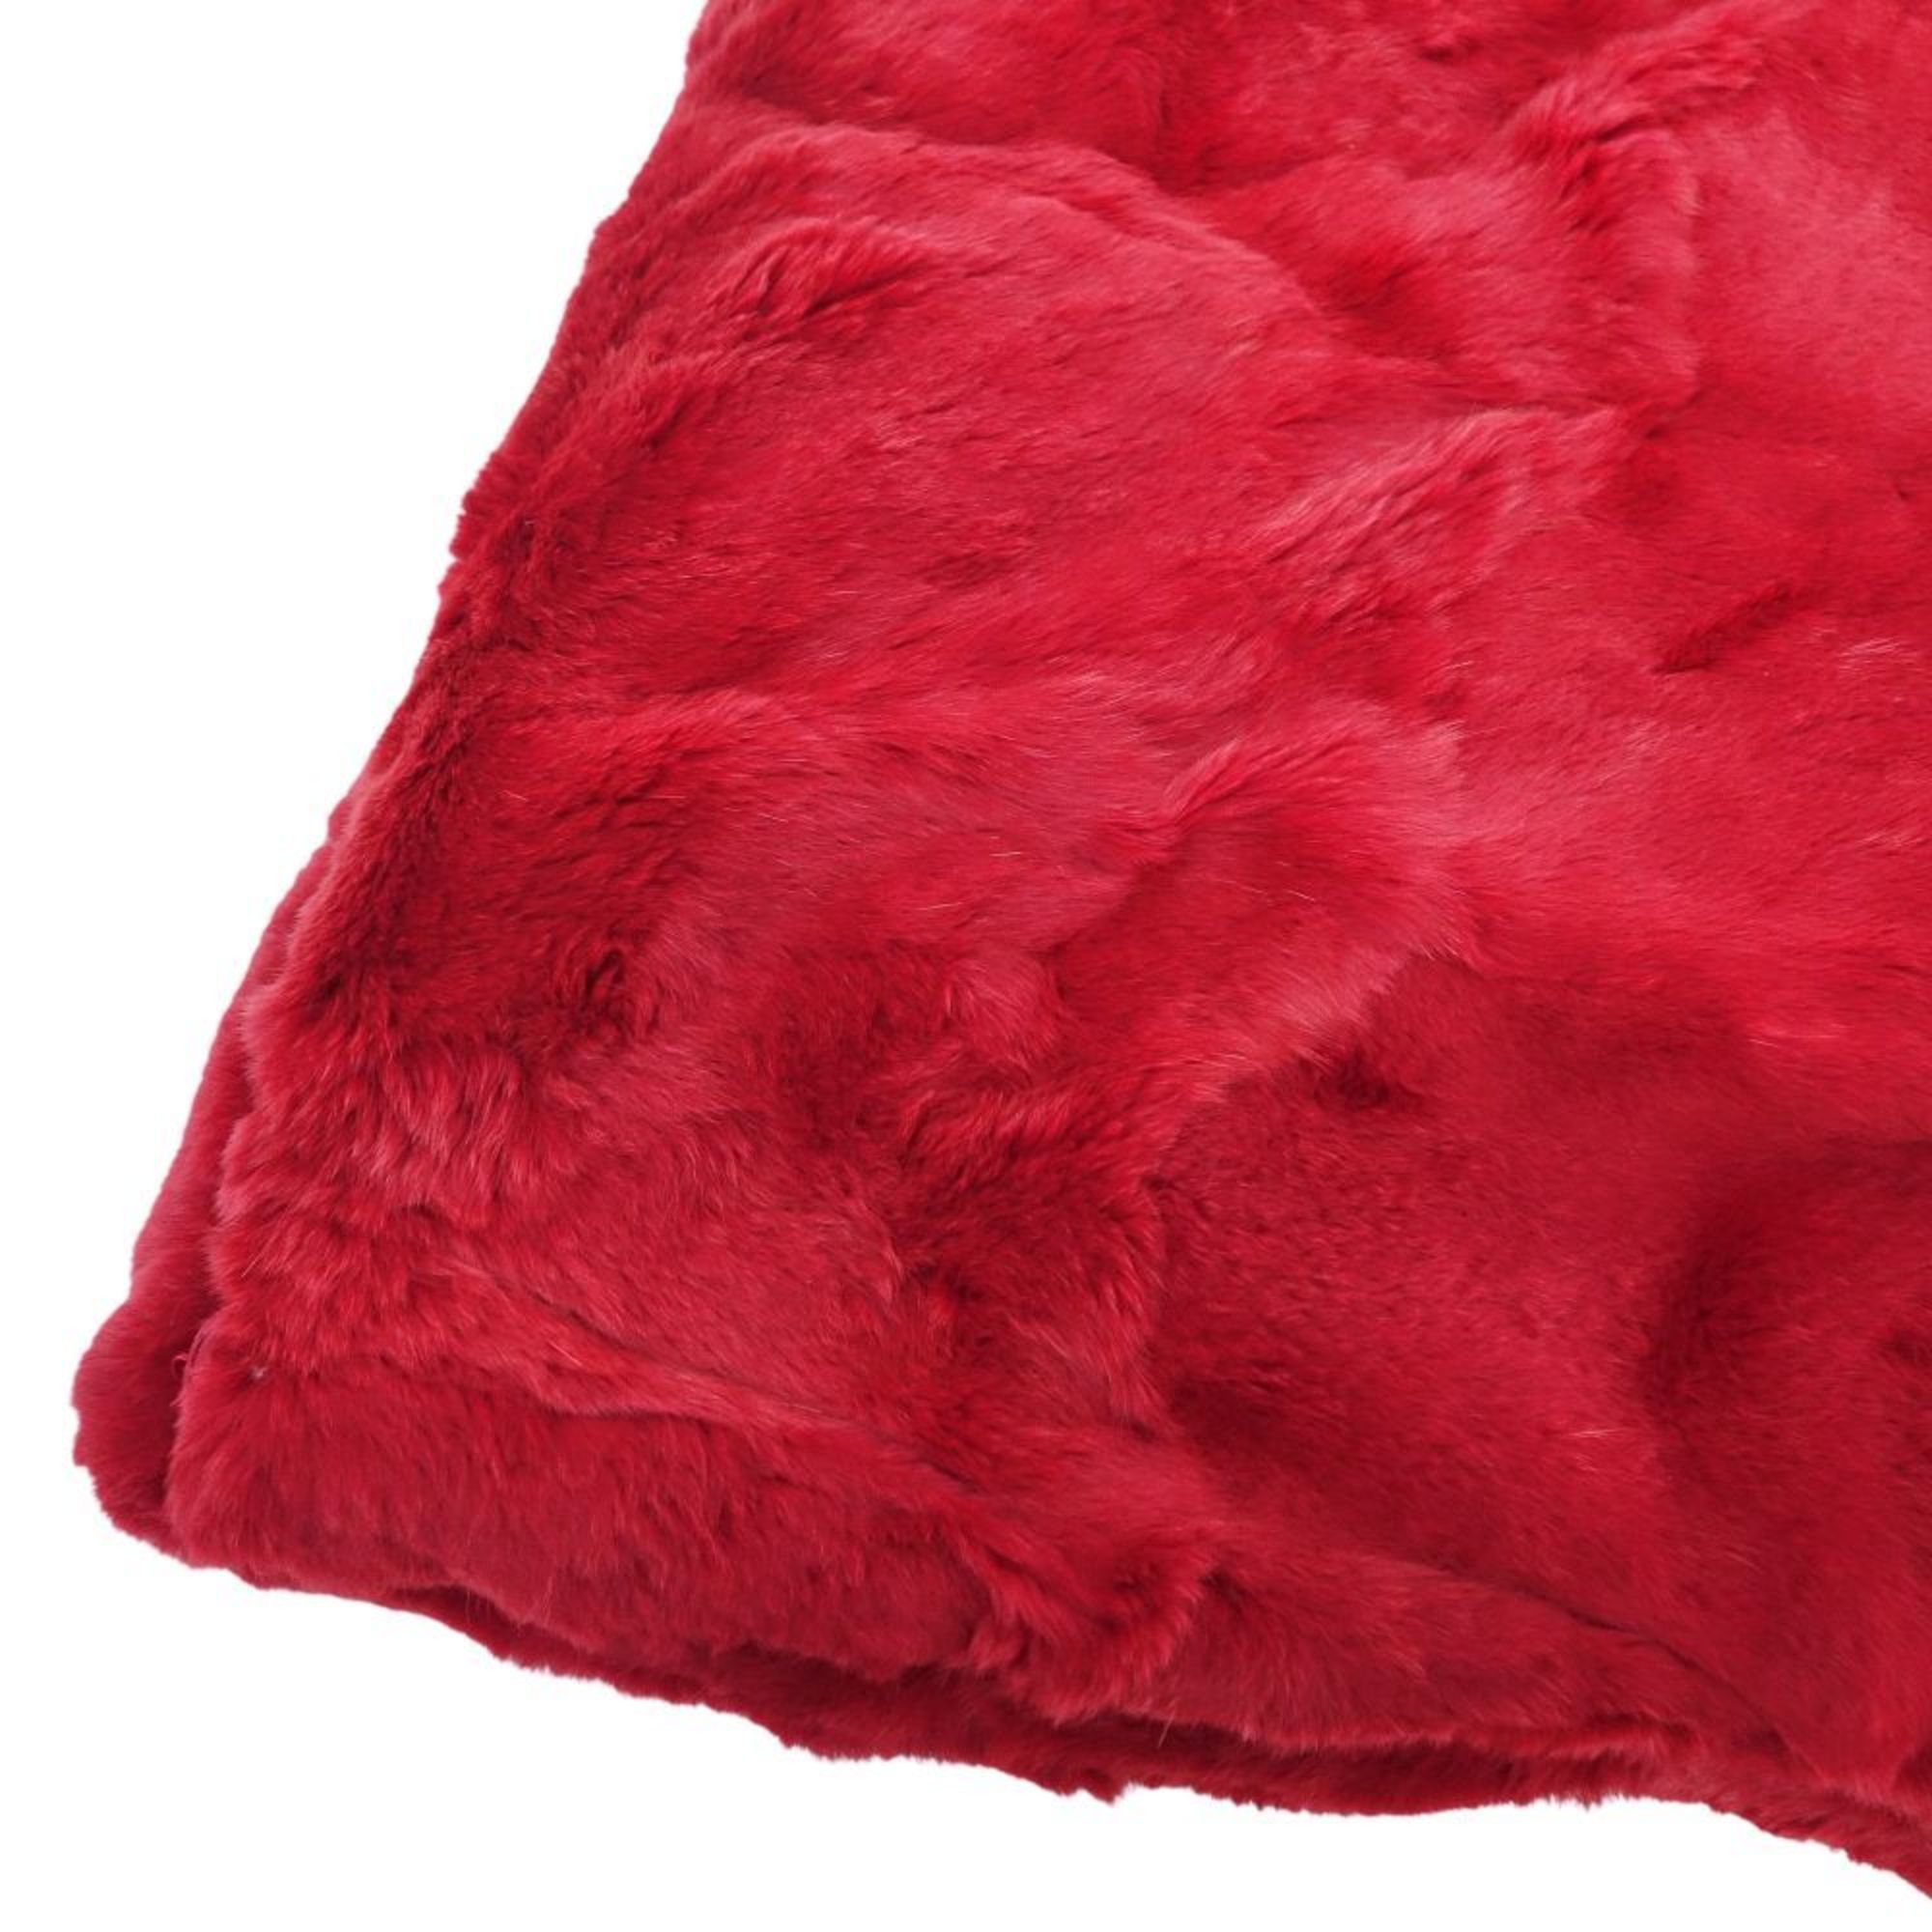 Dolce & Gabbana DOLCE&GABBANA Snood Scarf Stole Weasel Fur Women's UNICA (Free Size) Red